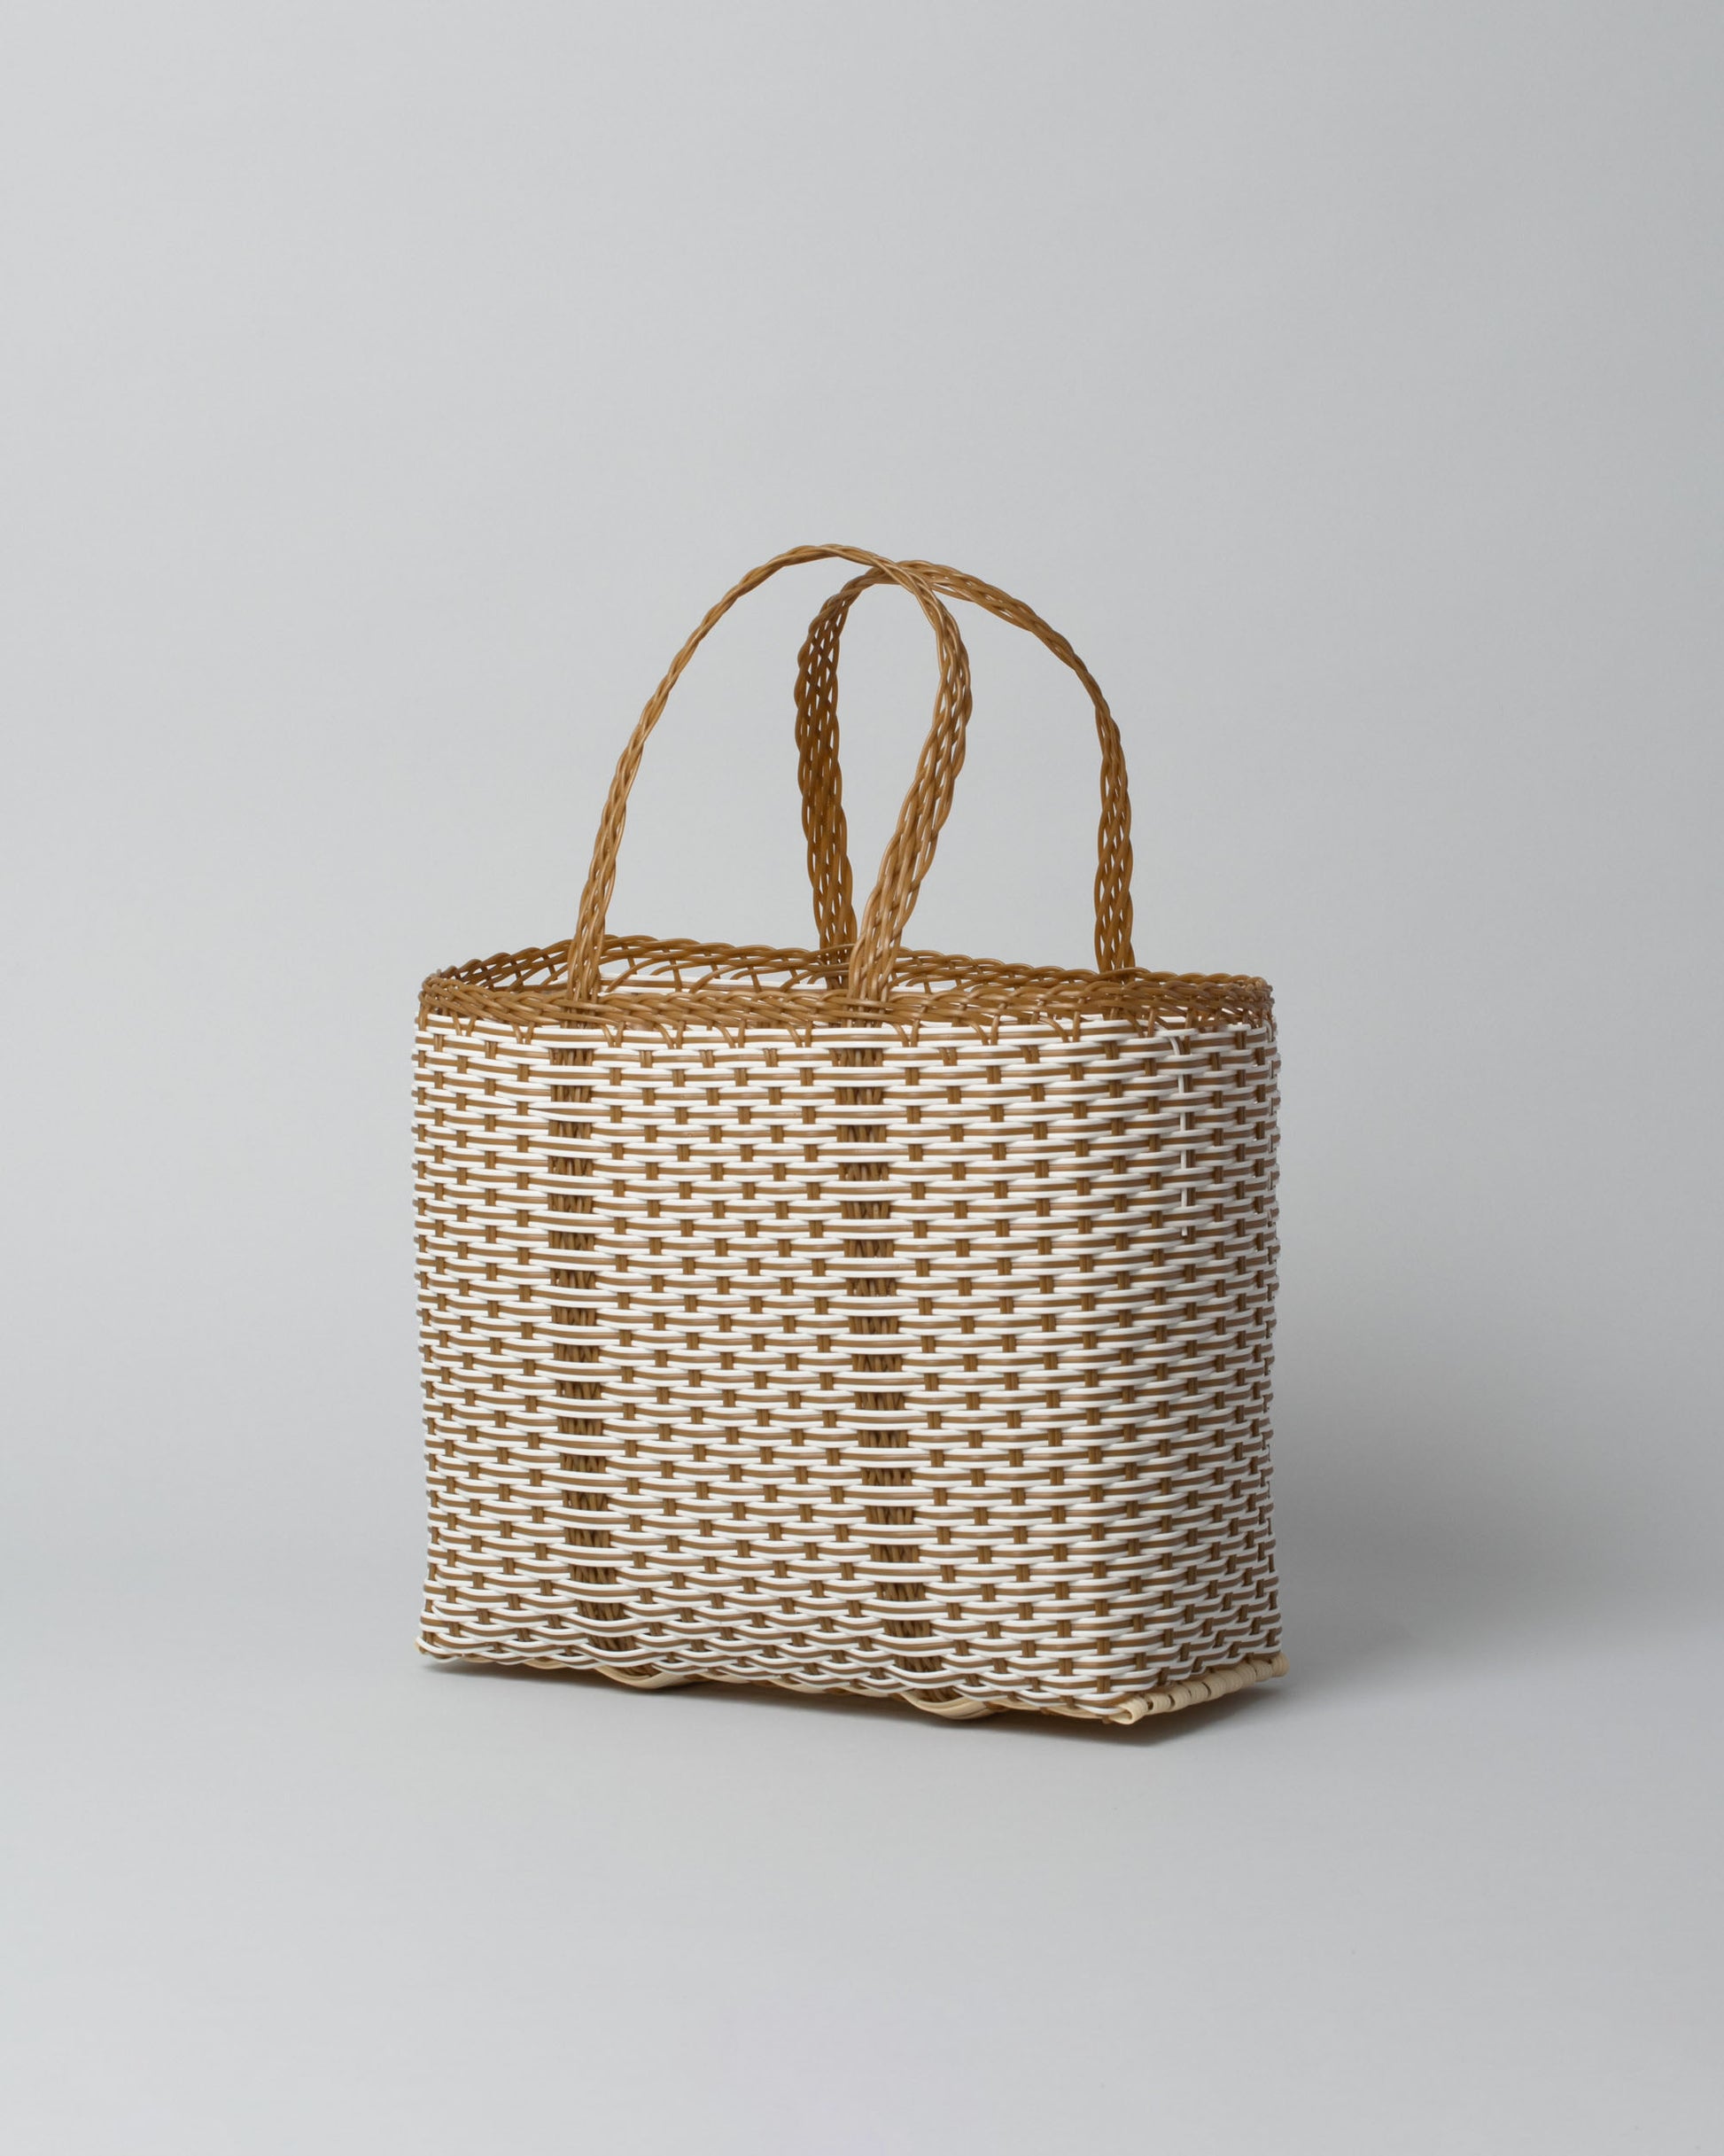 Palorosa Small White & Tobacco Bicolor Tote Basket Bag on light color background.